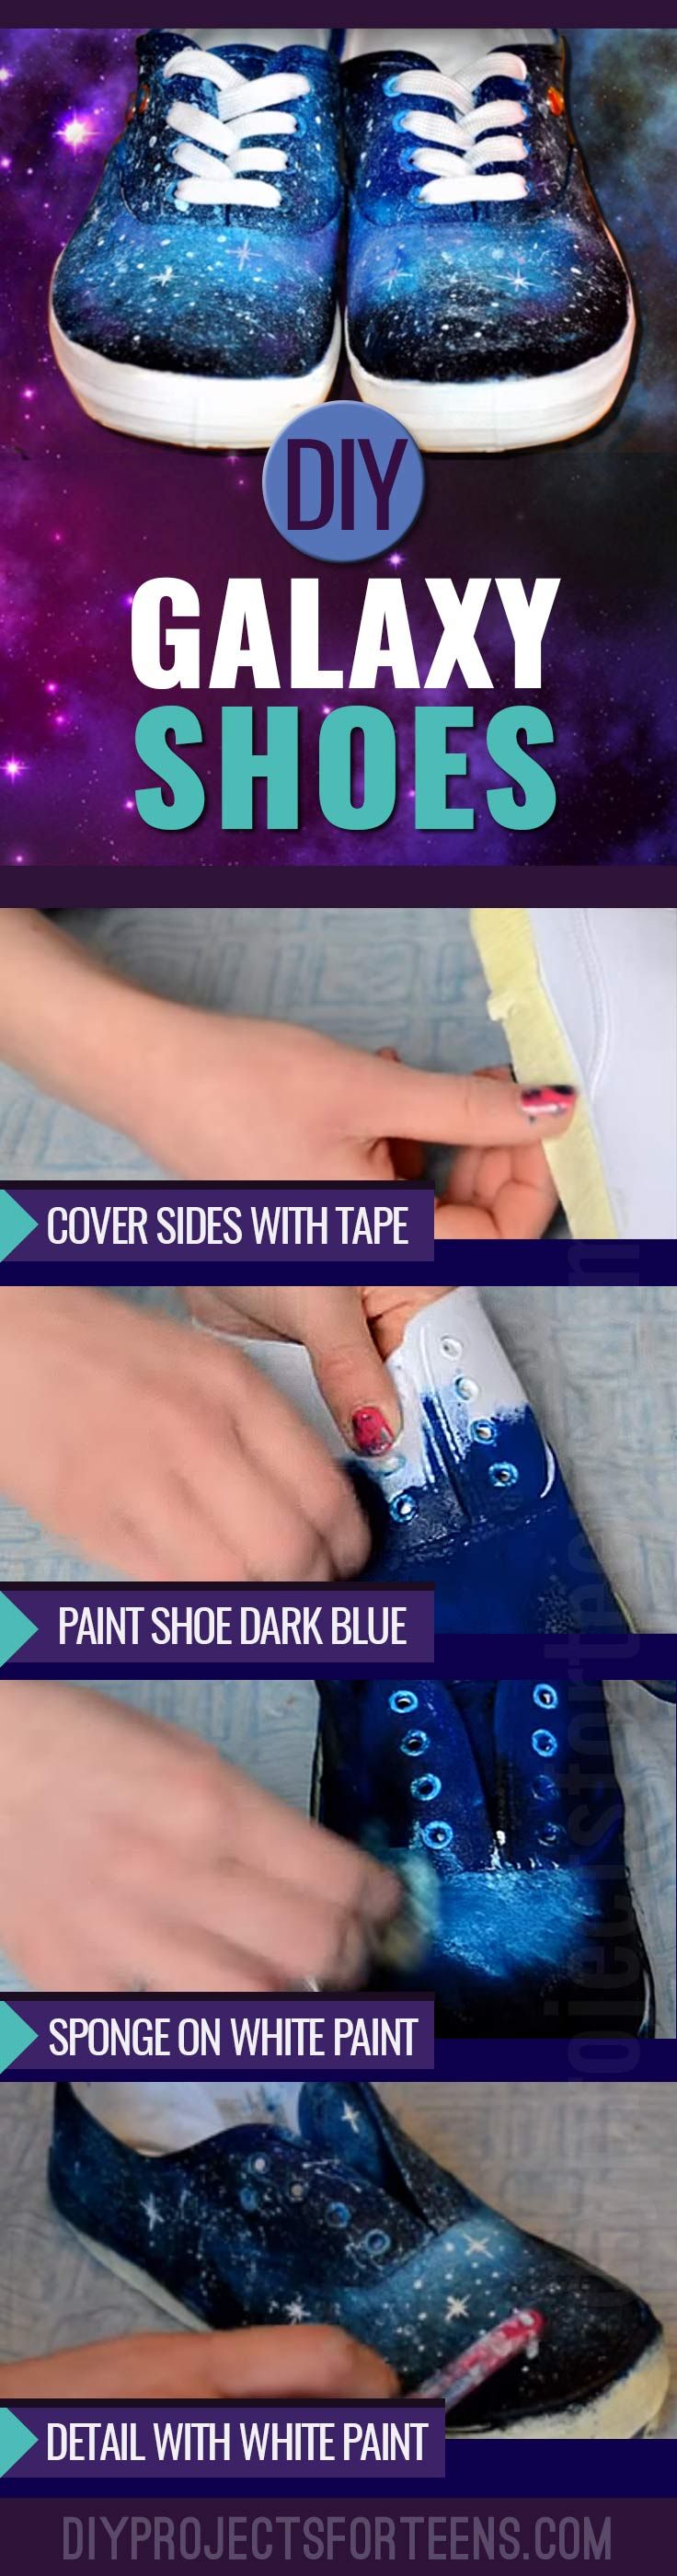 tie dye shoes instructions